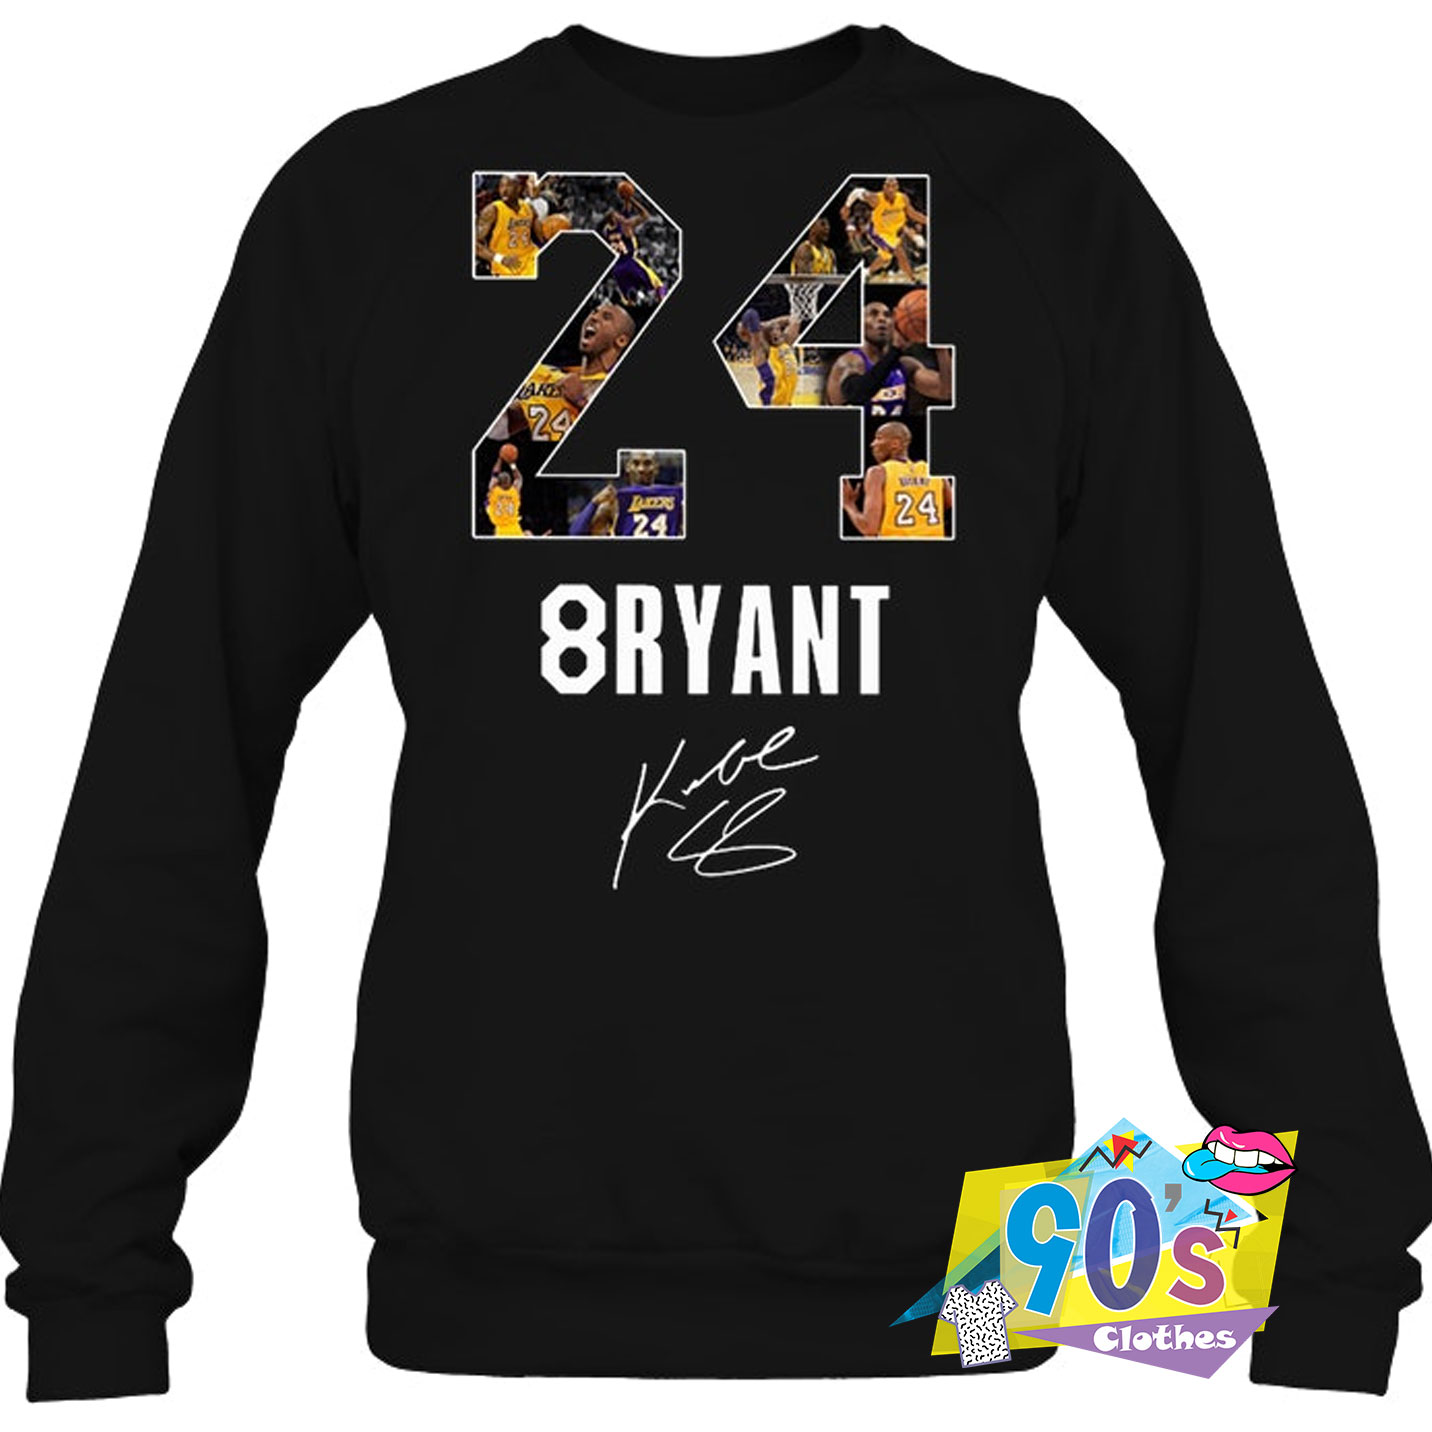 Special 24 8ryant Kobe Bryant Sweatshirt On Sale 90sclothes Com